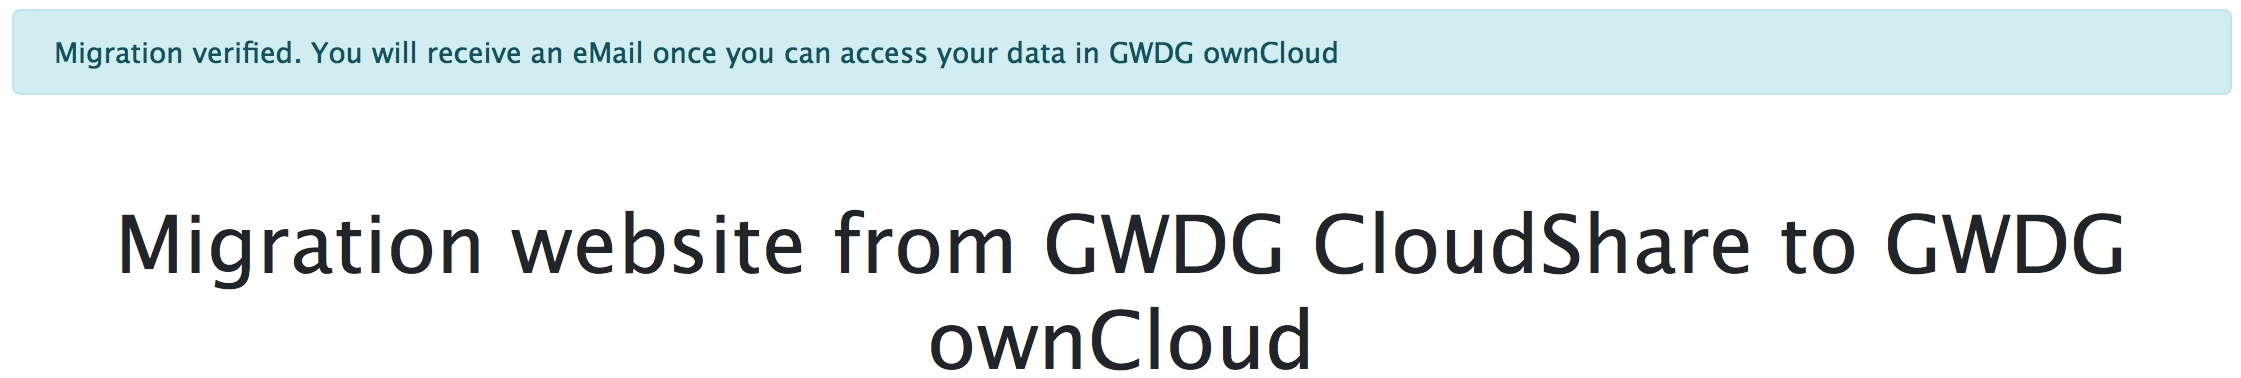 en:services:storage_services:gwdg_cloud_share:migration_verified.jpg